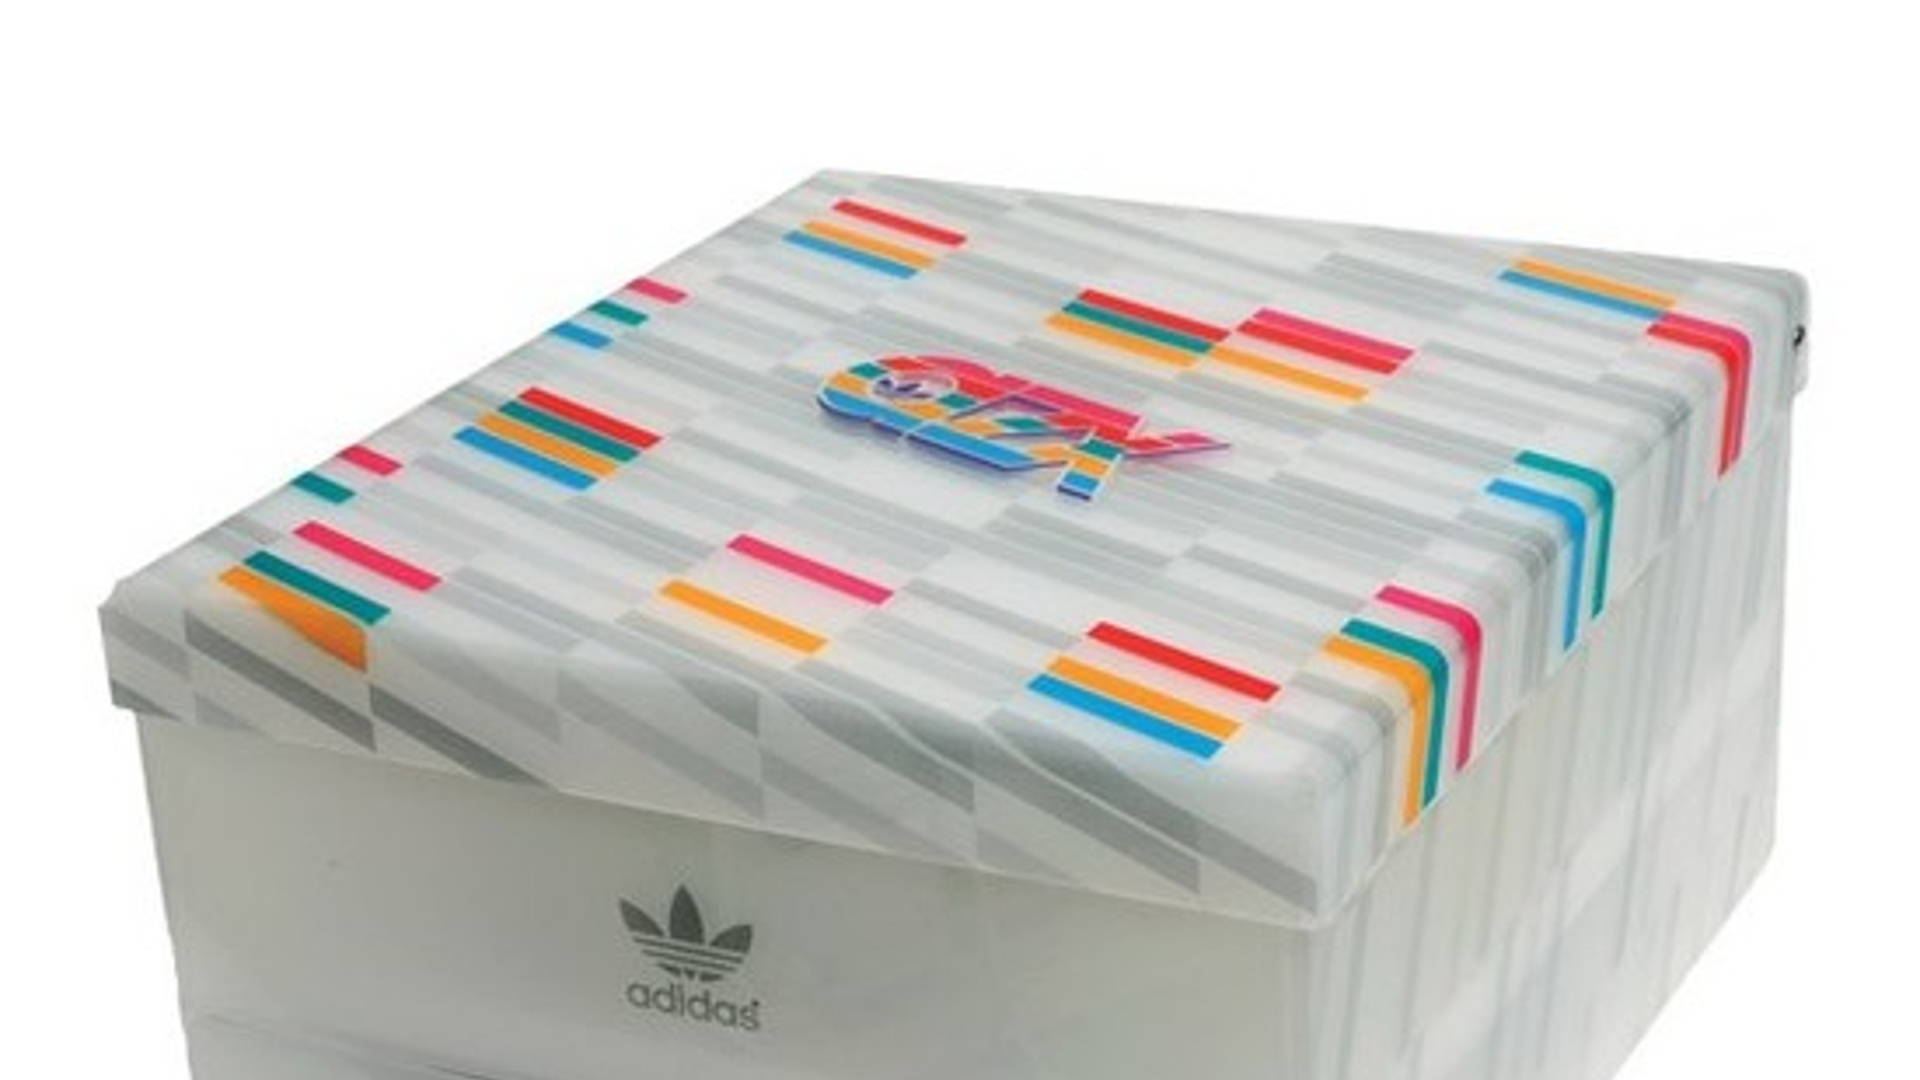 adidas Originals aZX project | Dieline - Design, Branding & Packaging  Inspiration